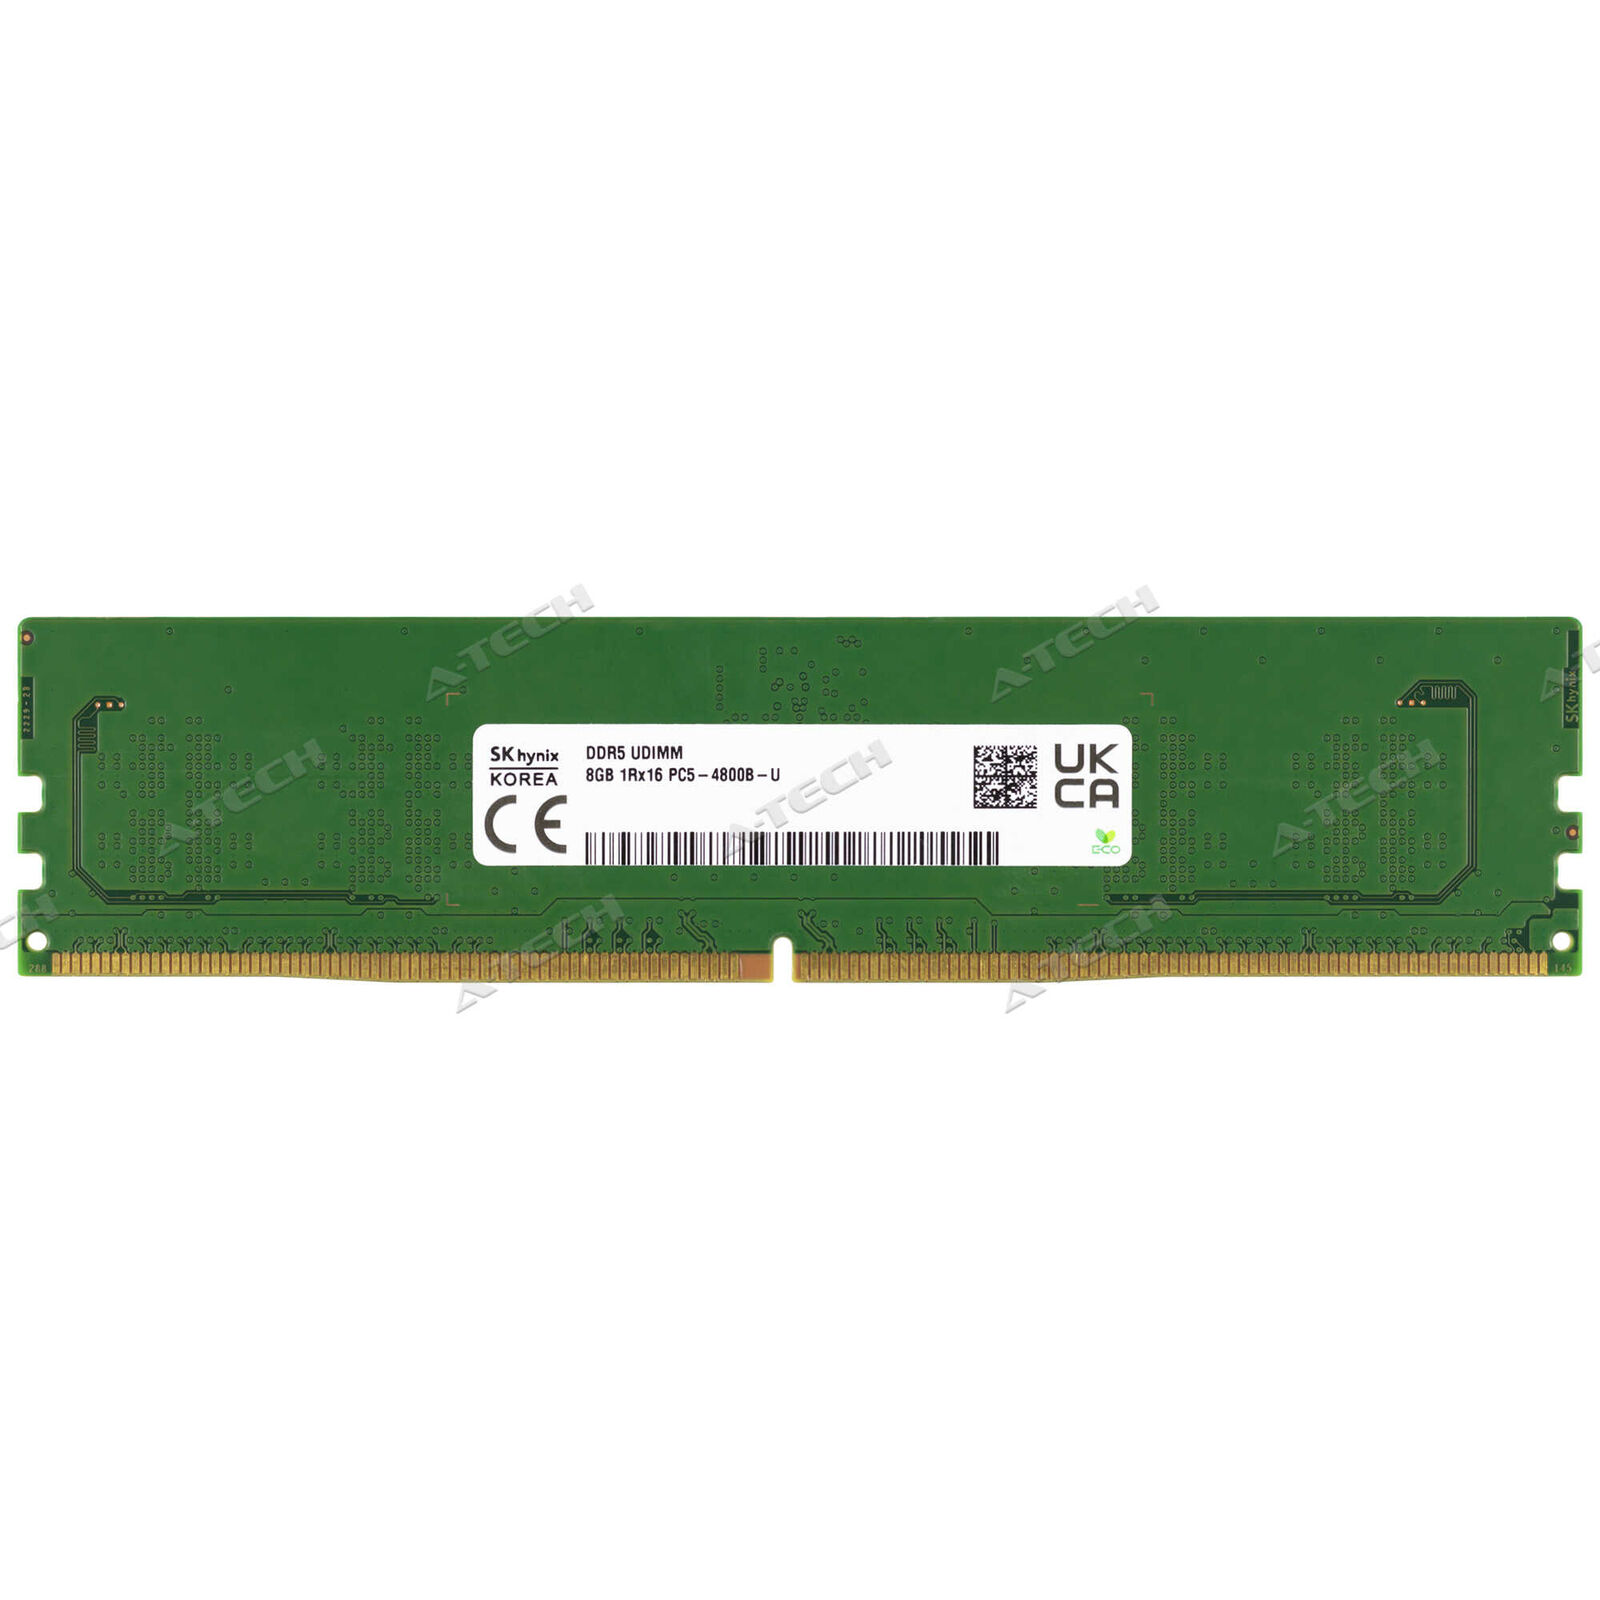 Hynix 8GB DDR5-4800 DIMM HMCG66MEBUA081N HMCG66MEBUA084N Desktop Memory RAM